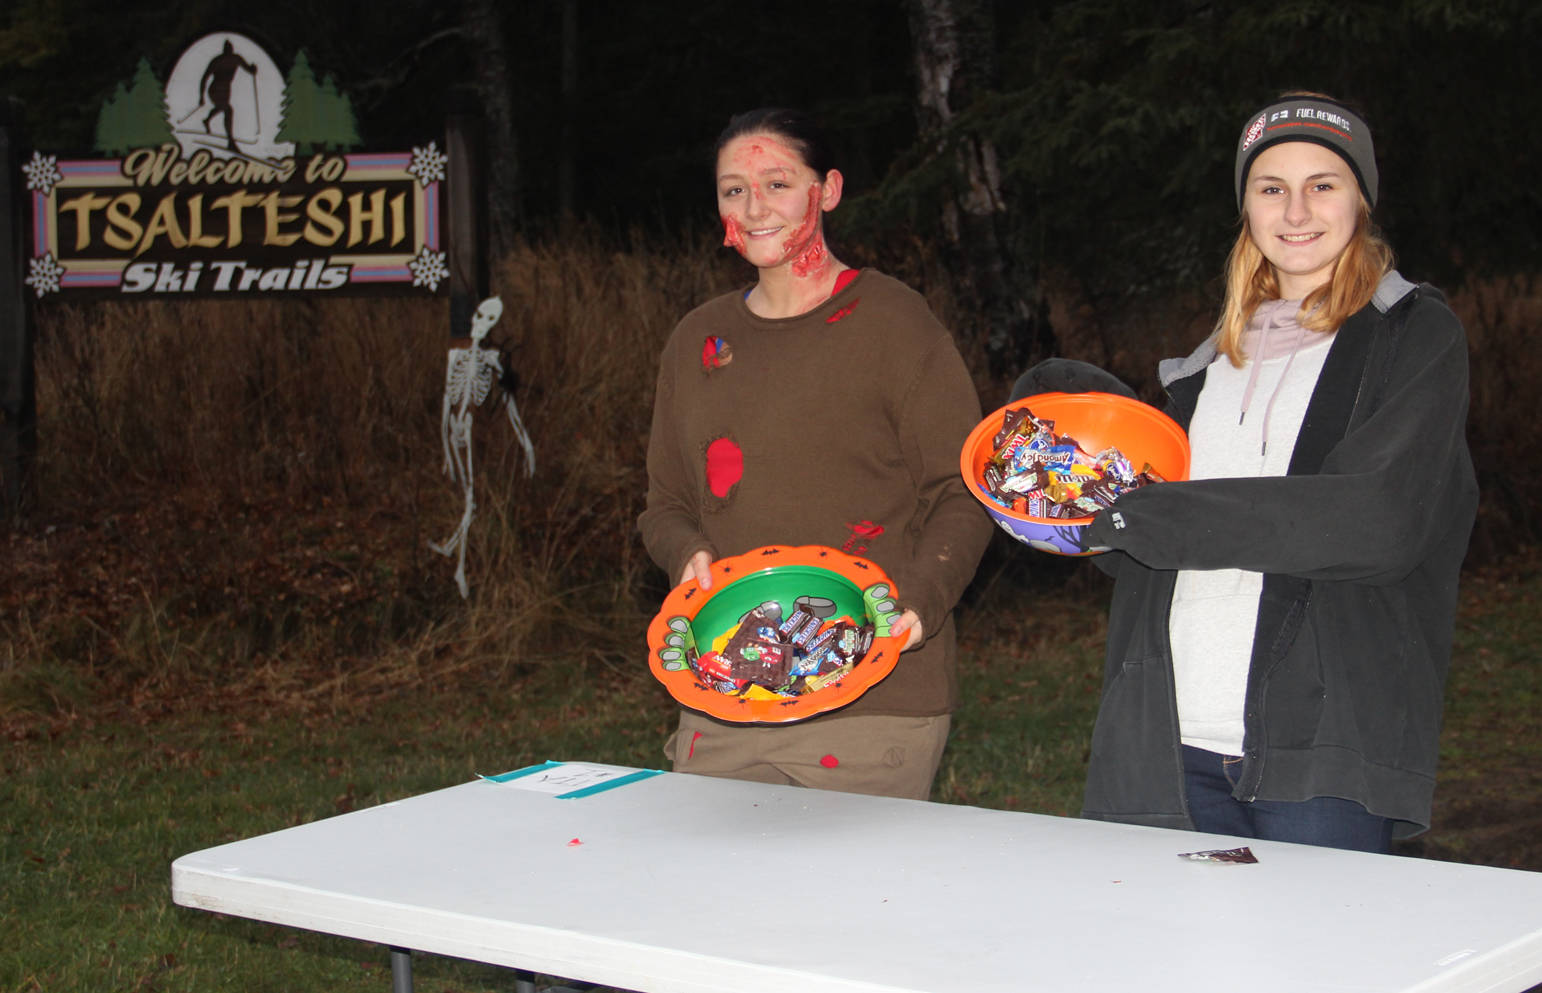 Gateway to happy Halloween trails at Tsalteshi Zombie run.